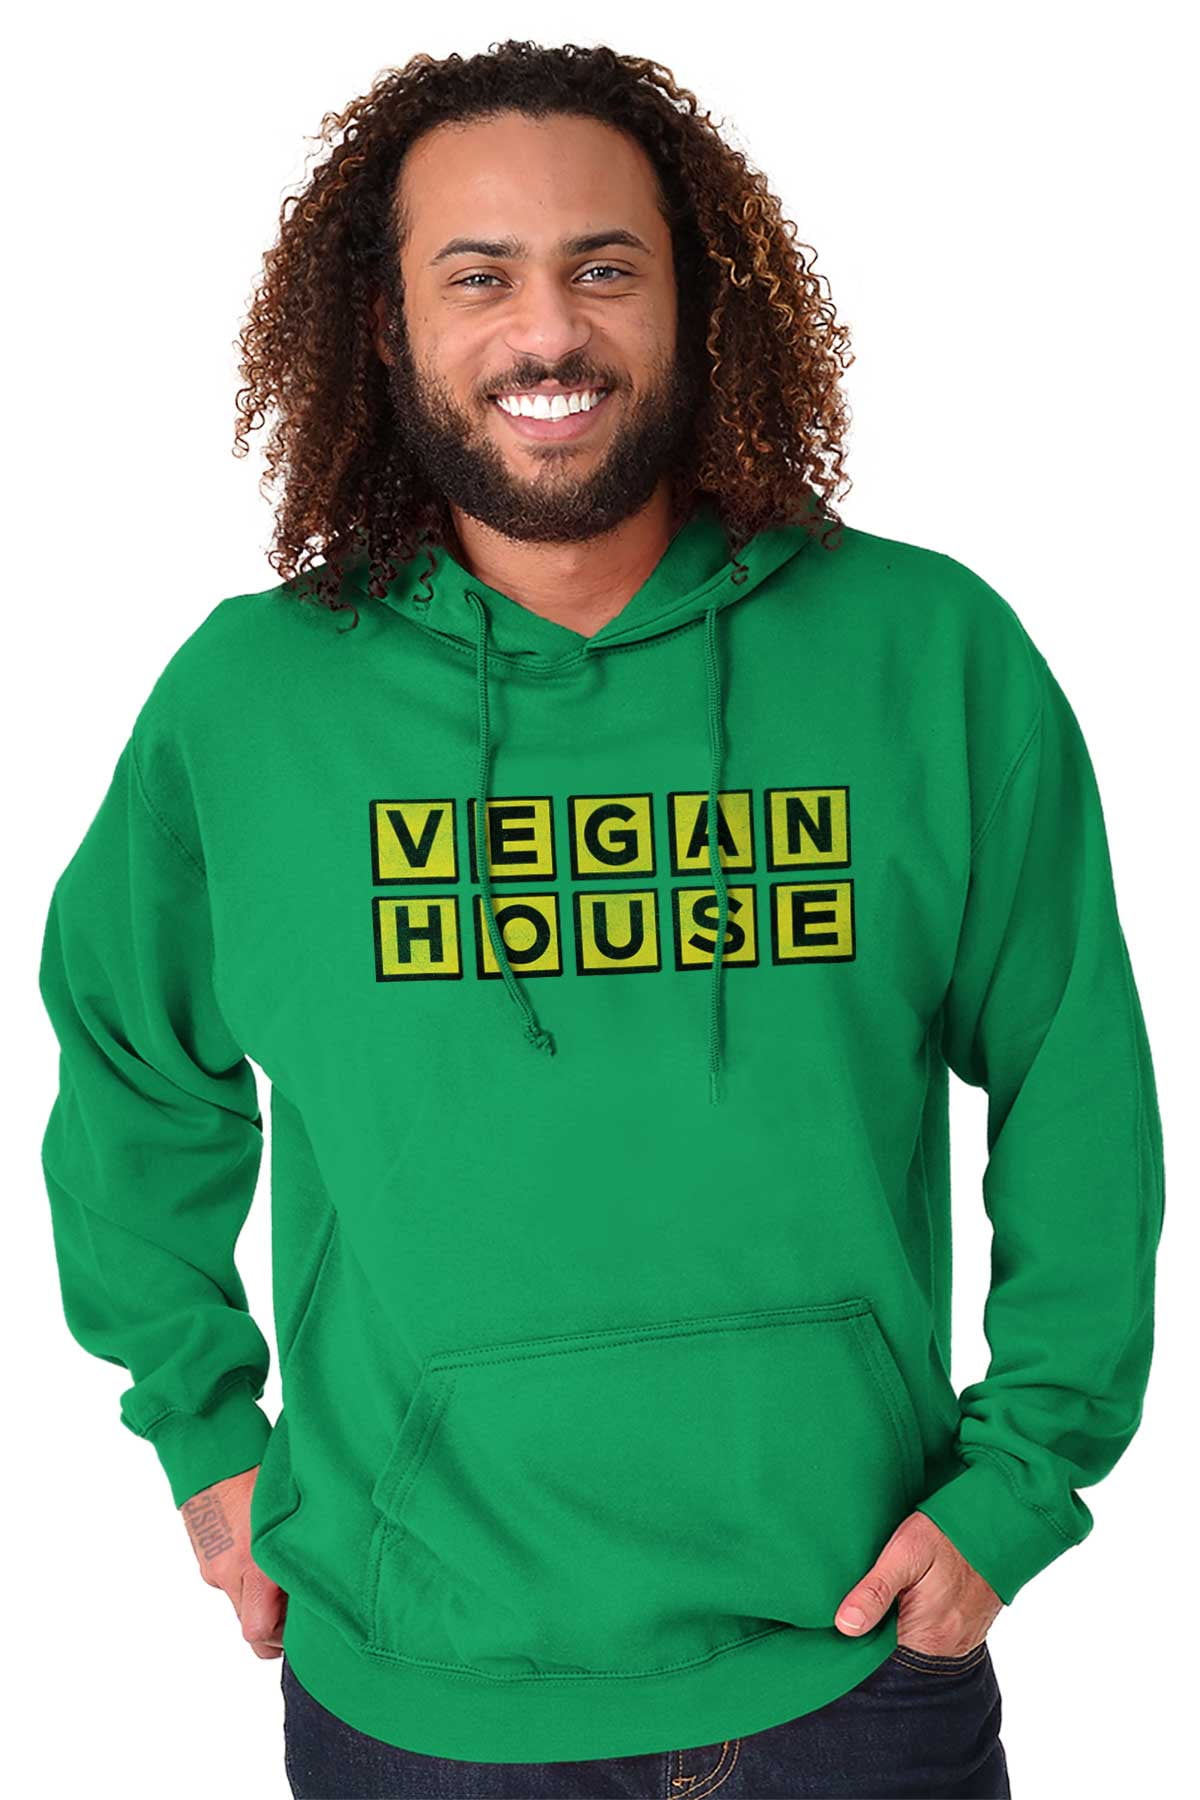 Get a Waffle House Hoodie for $19.98 at Walmart! #wafflehousehoodie #w